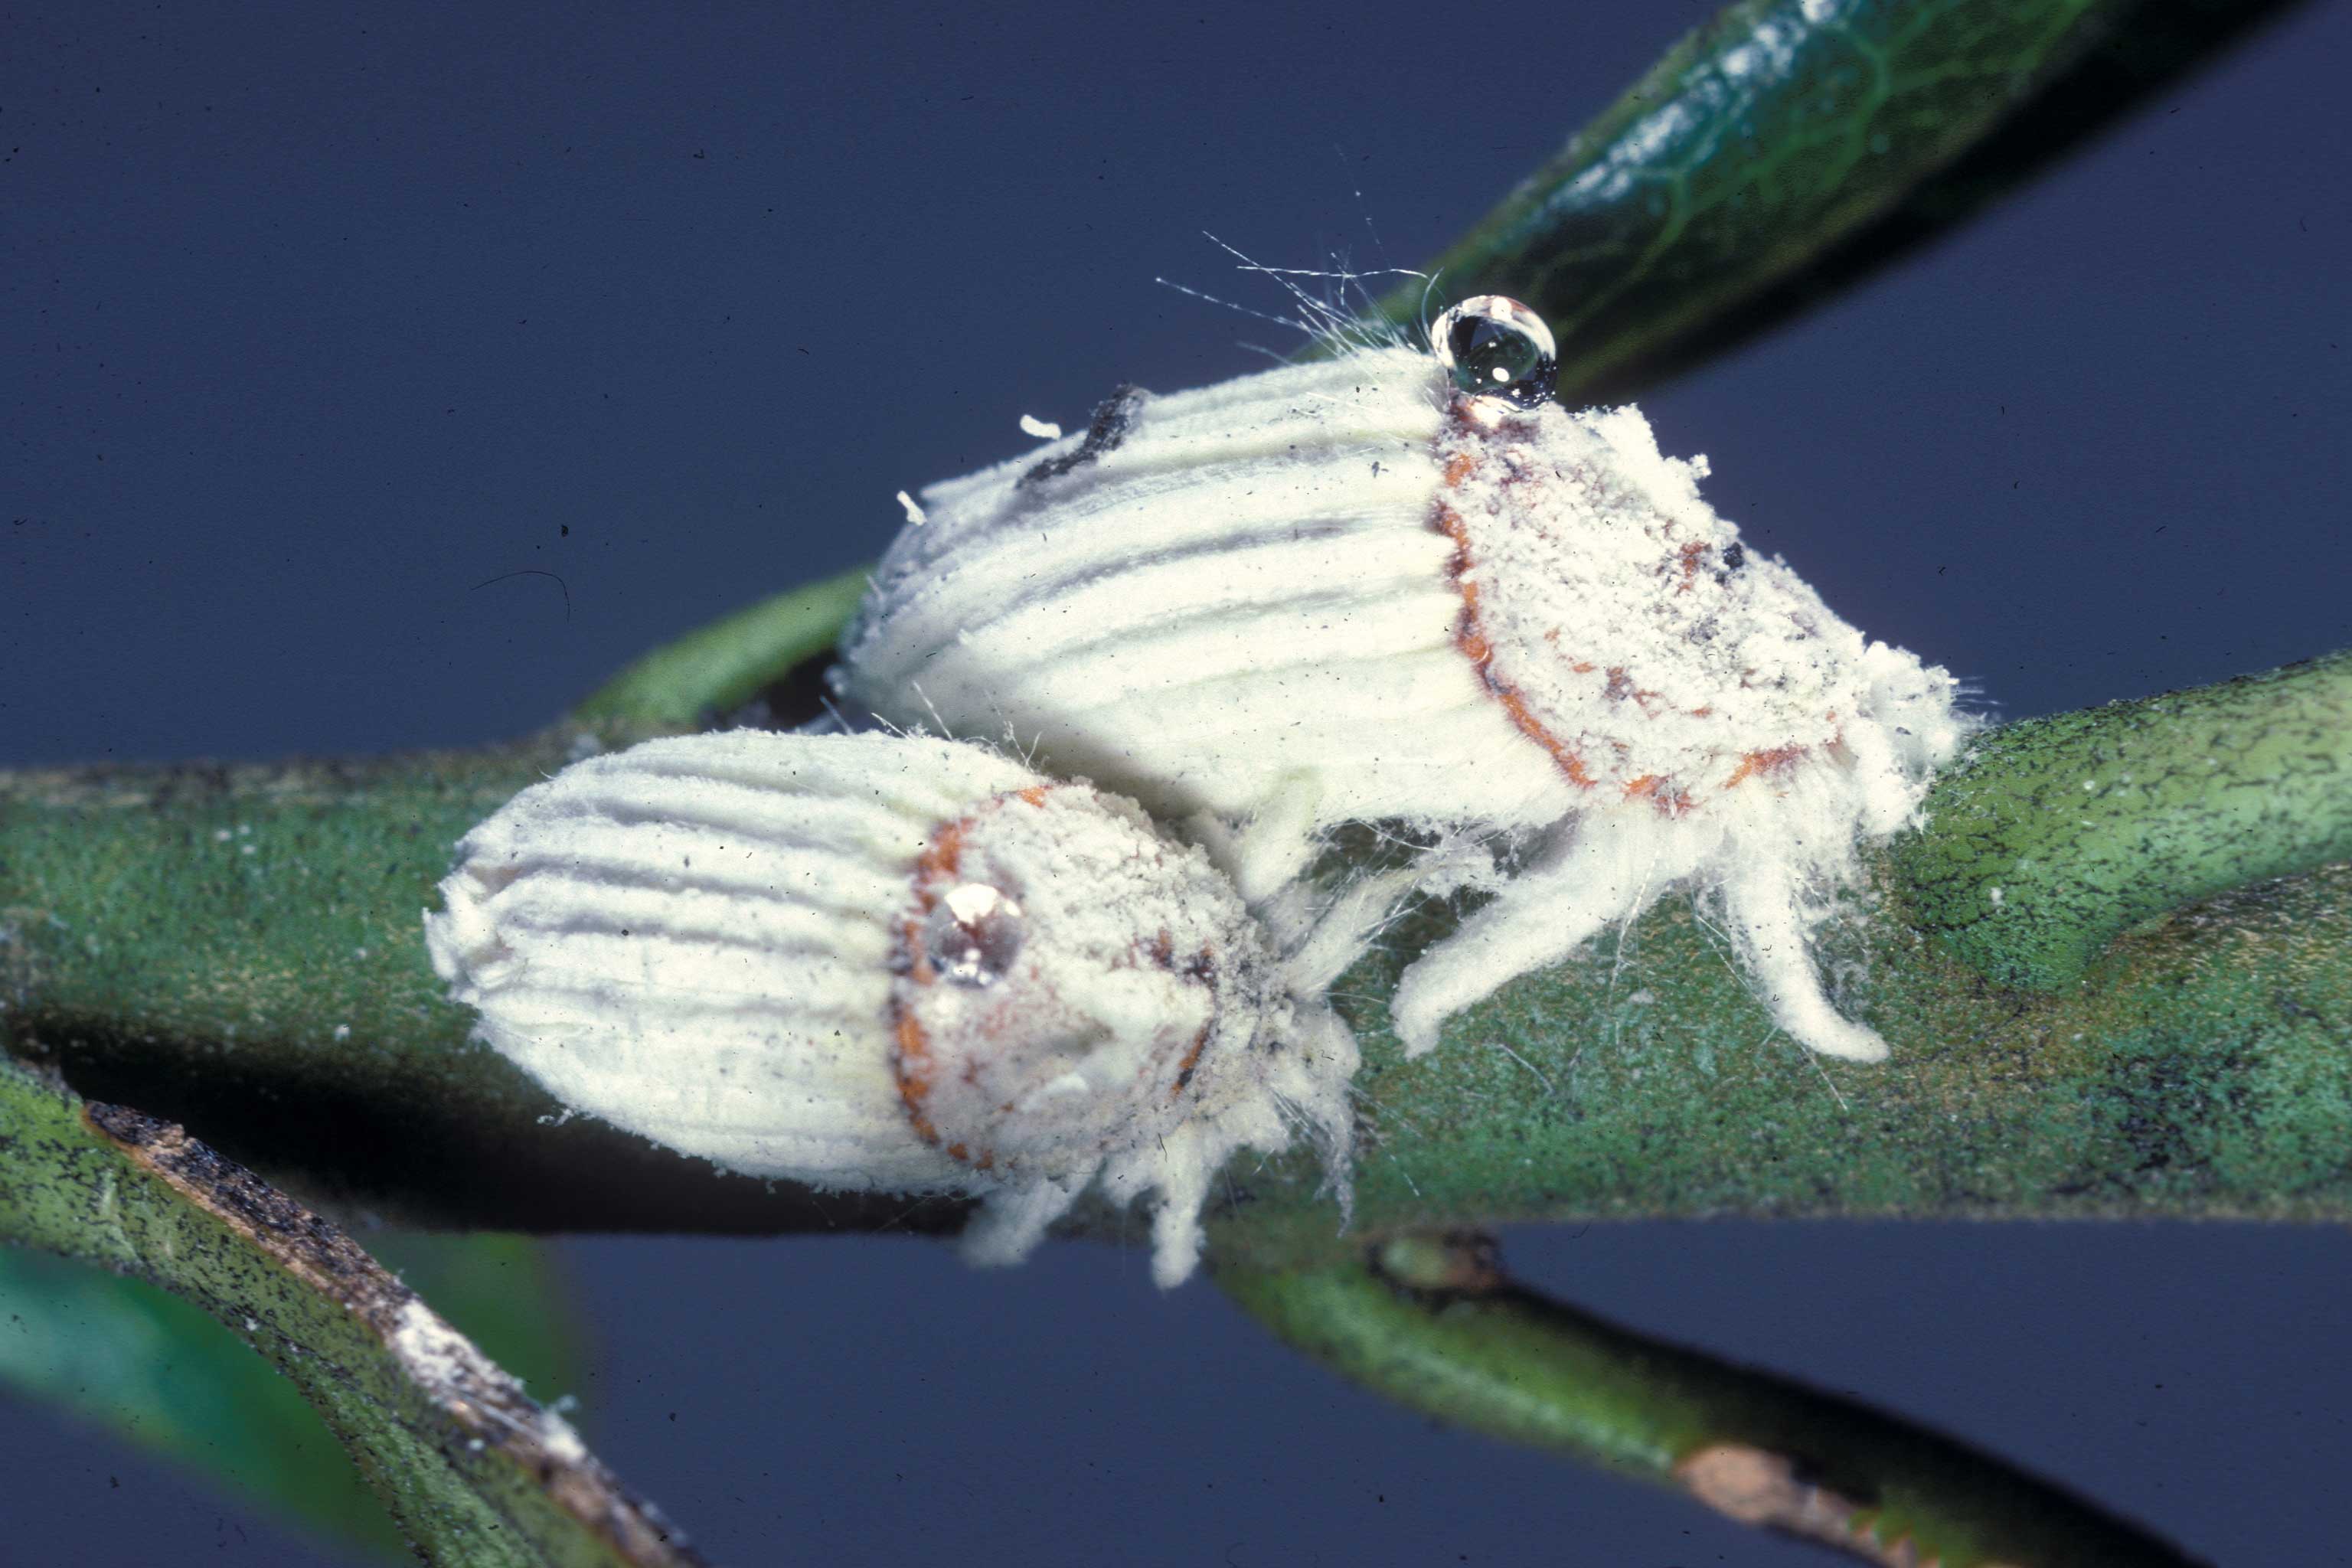 Figure 1. Cottony cushion scale (Icerya purchasi) adult females. Photo: Sturgis McKeever, Georgia Southern University, Bugwood.org.